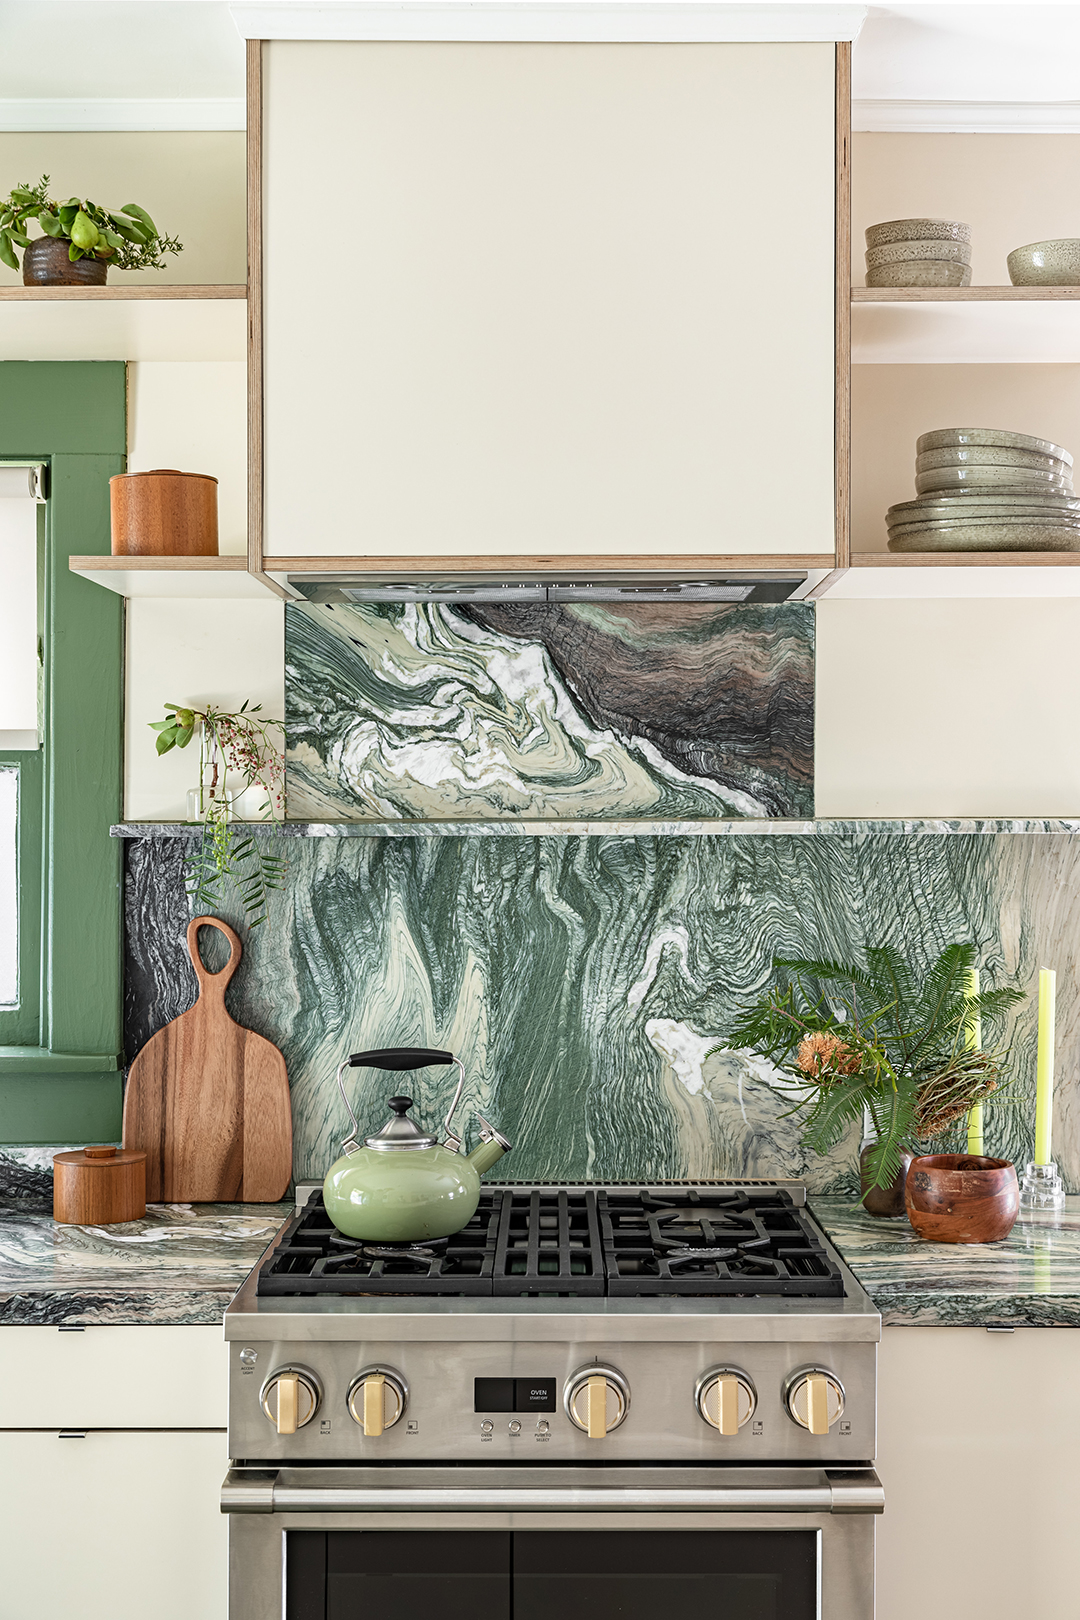 Kitchen stove with green marble backsplash